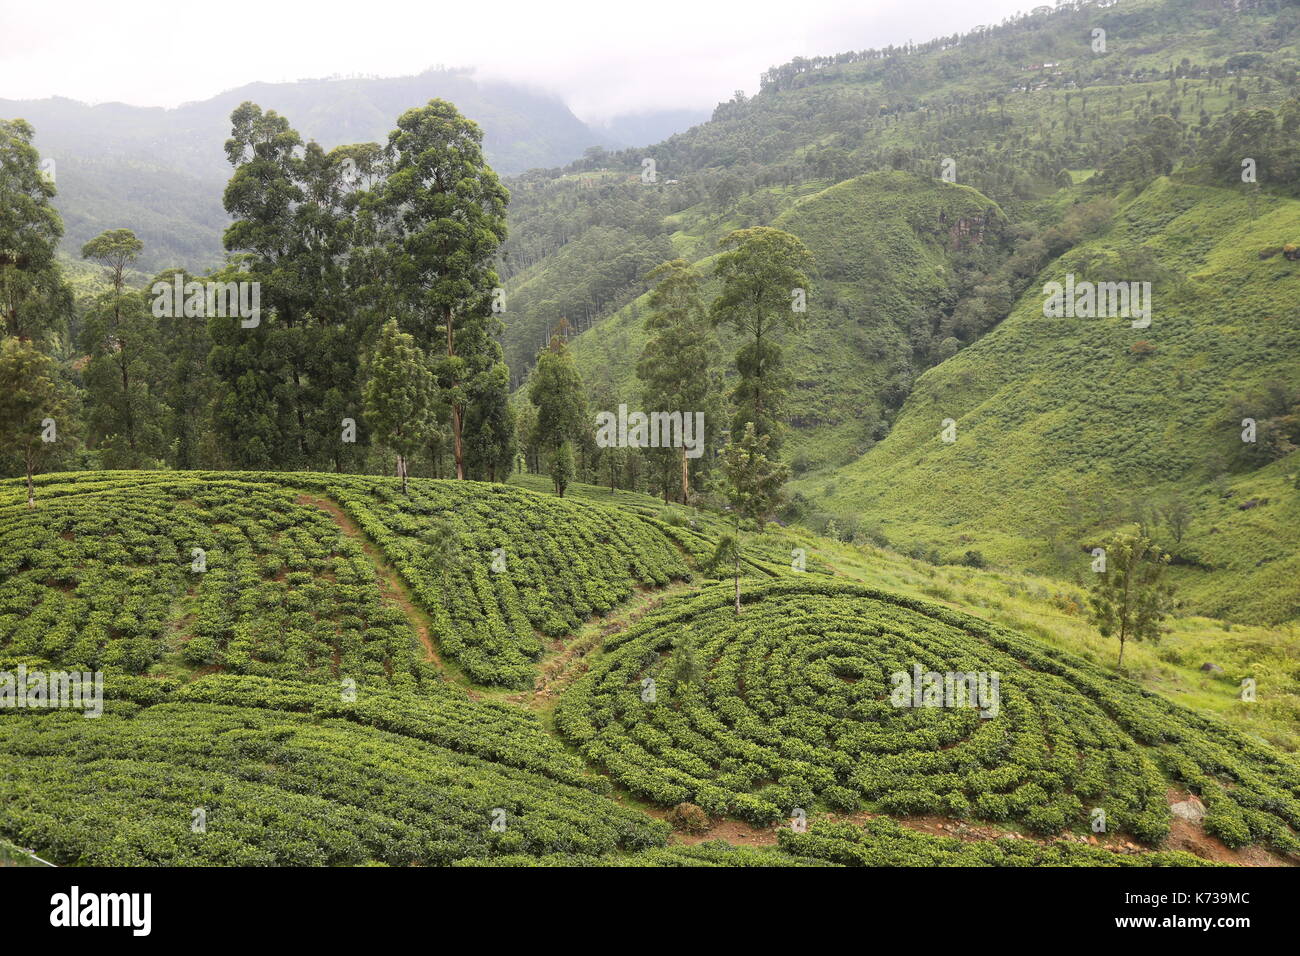 Las plantaciones de té de Sri Lanka, el sudeste asiático, hill country, recolectores, finca de té, café, té, selector de cosecha, té de Ceilán, Desayuno té inglés, agricultura Foto de stock